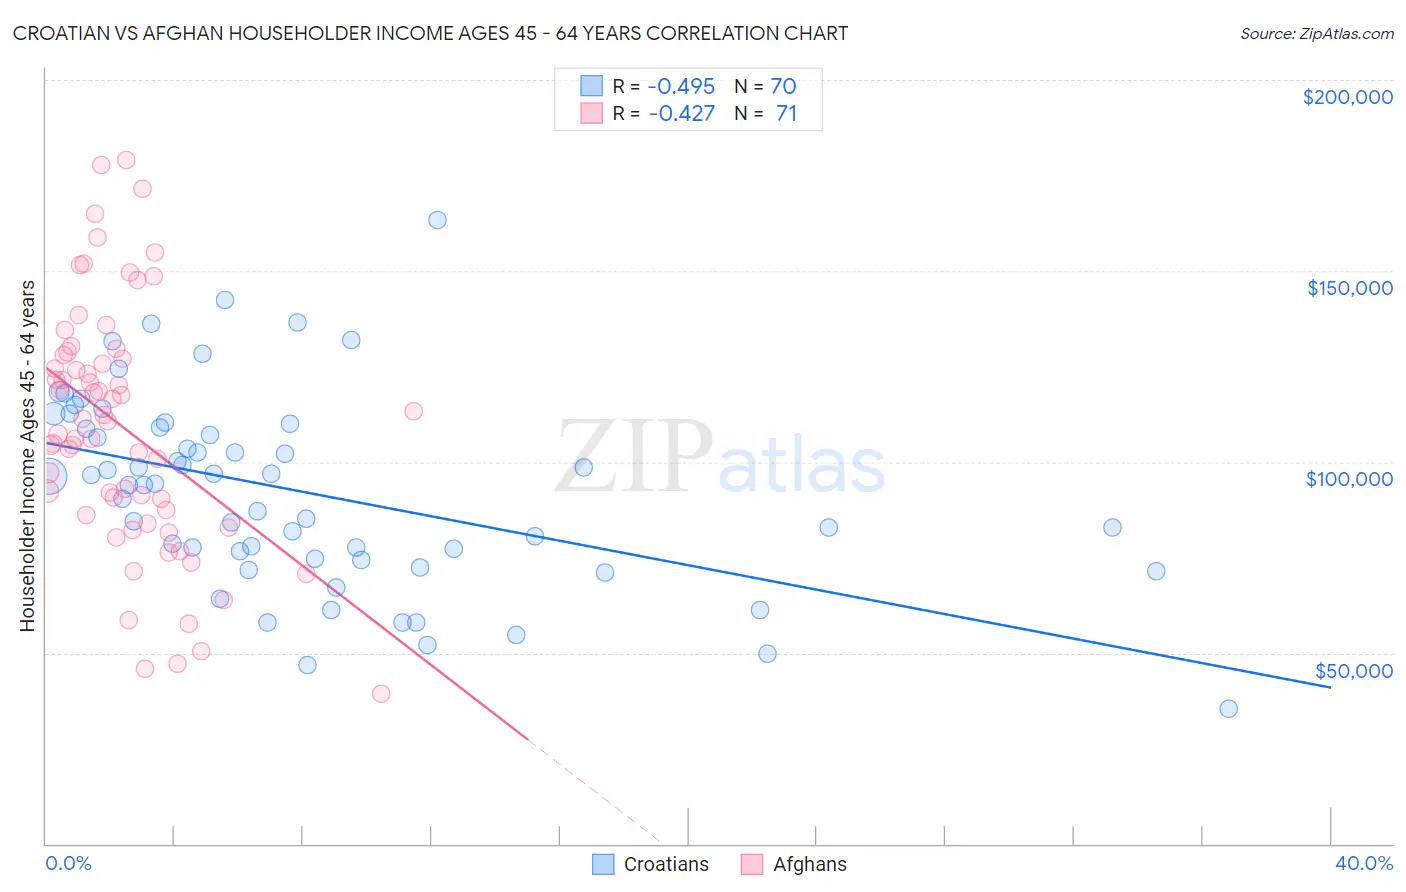 Croatian vs Afghan Householder Income Ages 45 - 64 years